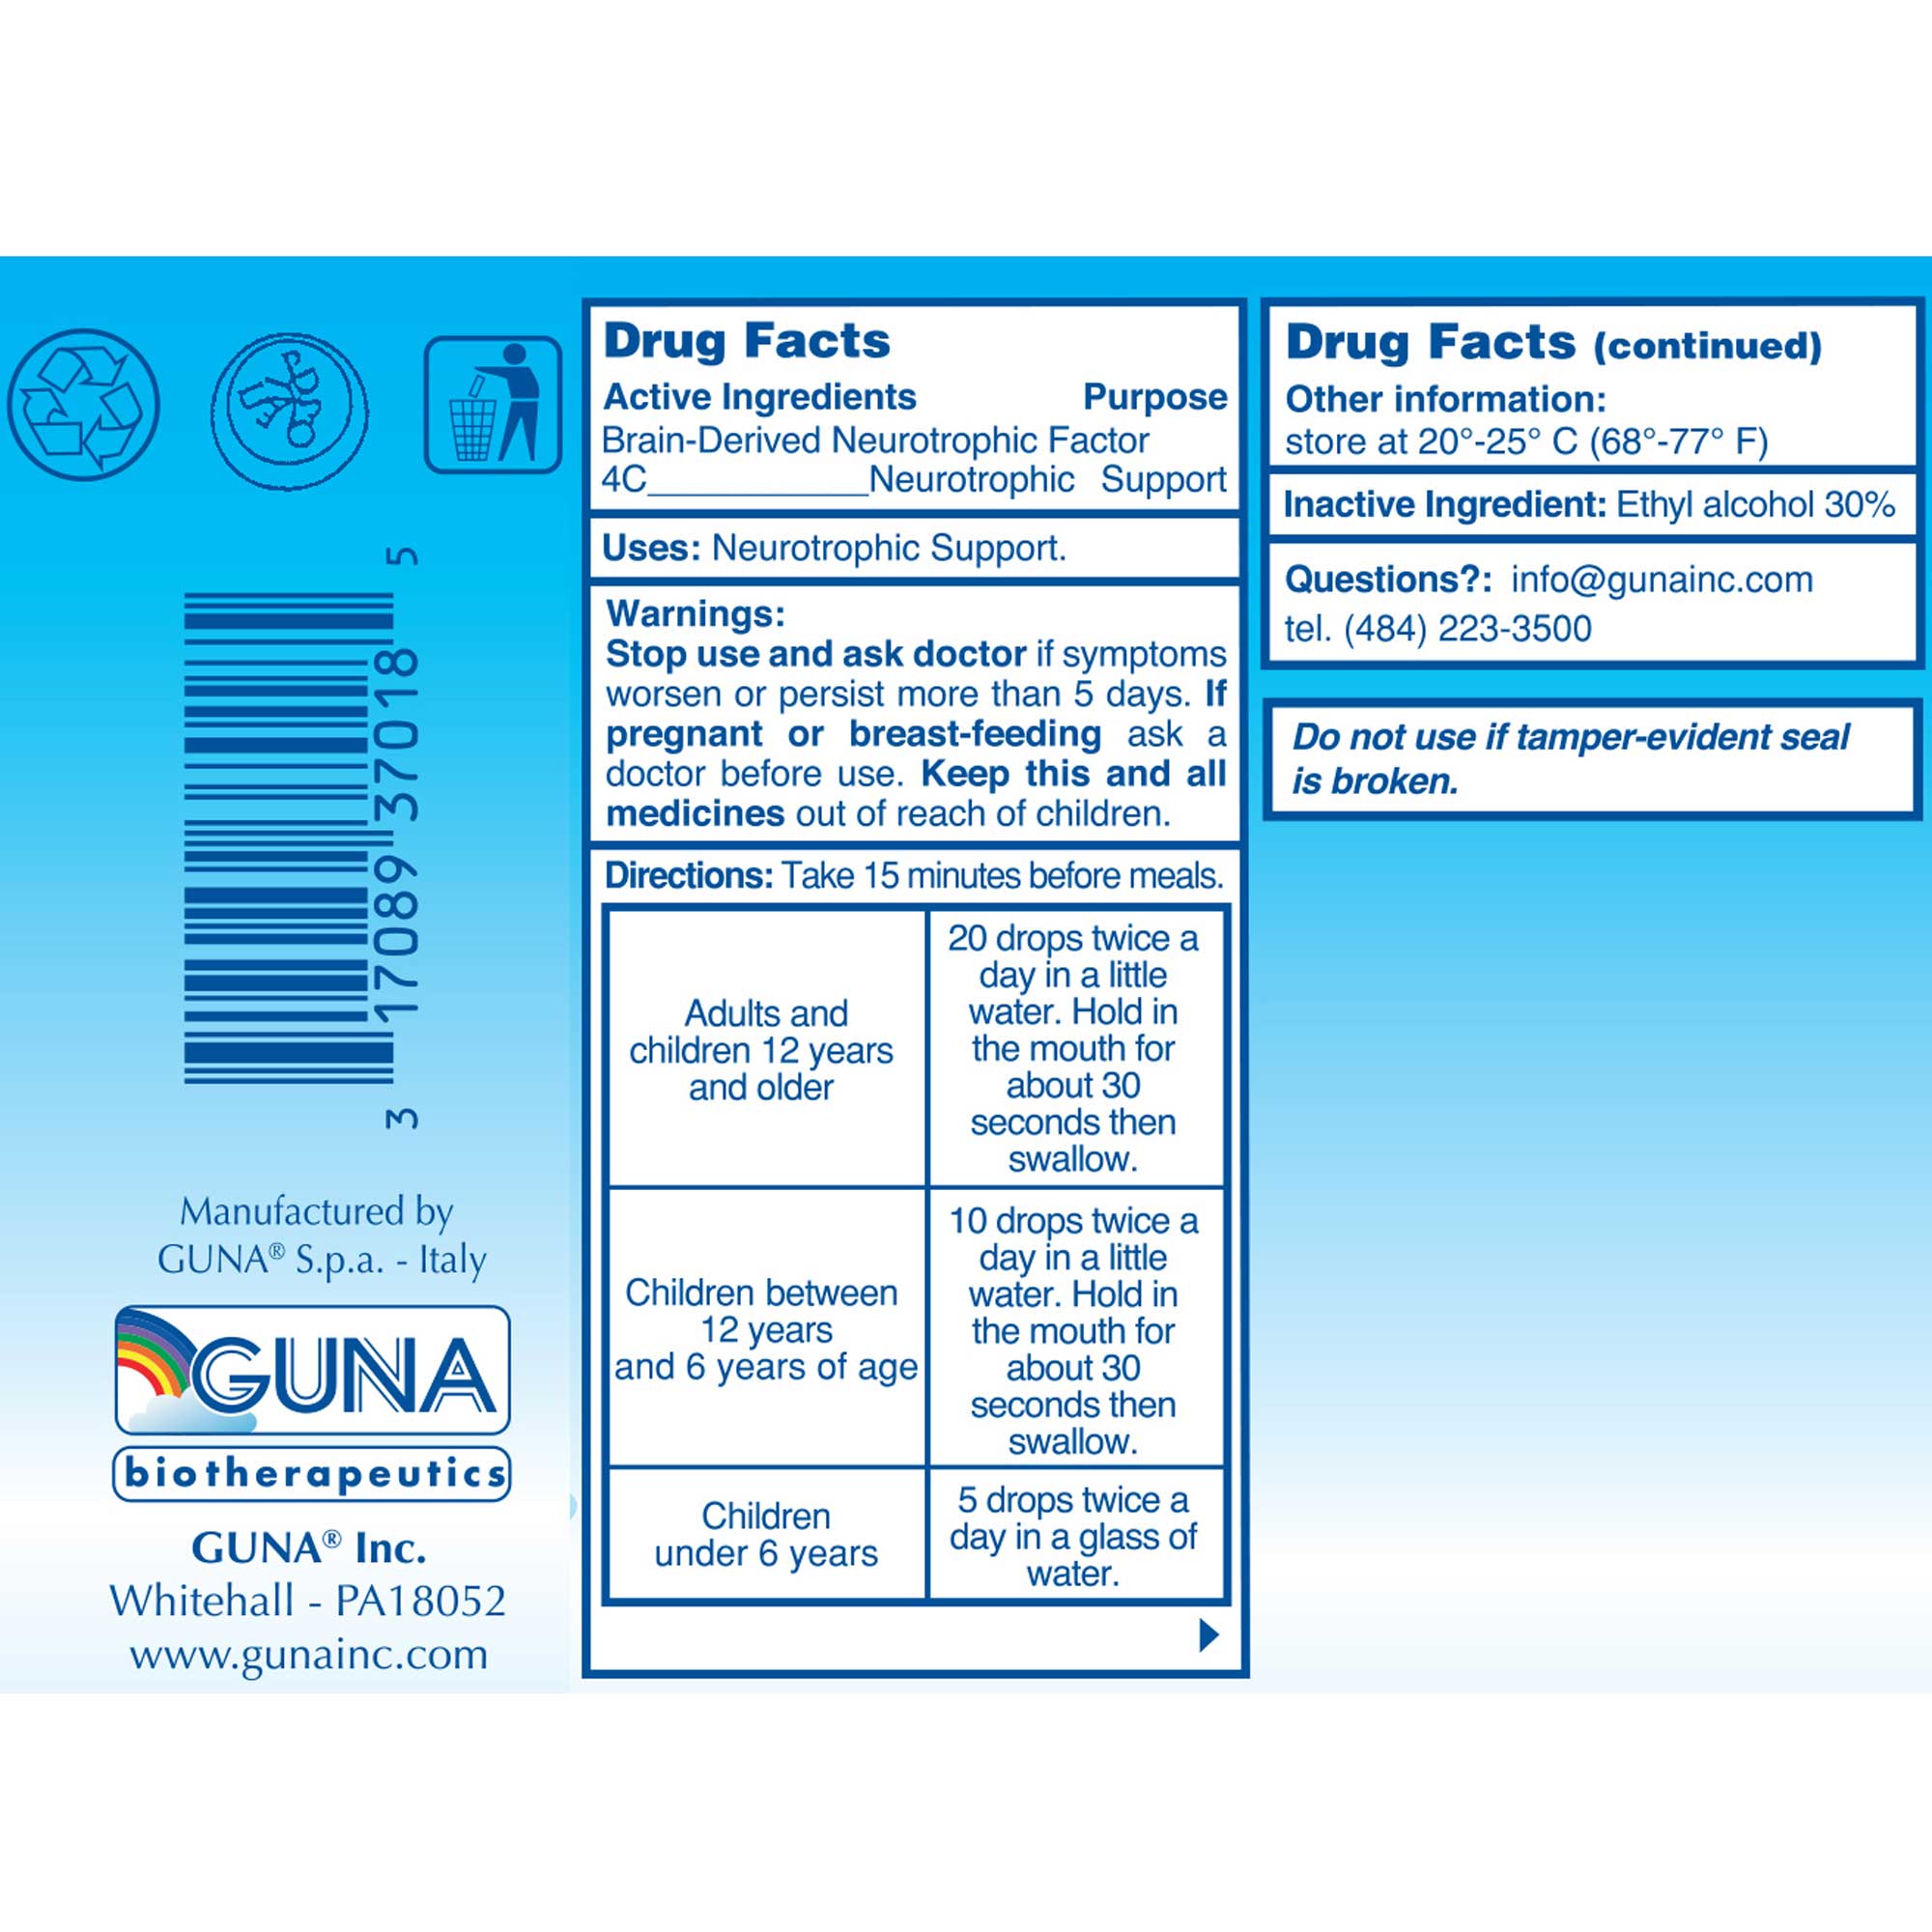 GUNA Biotherapeutics GUNA-BDNF Inggredients